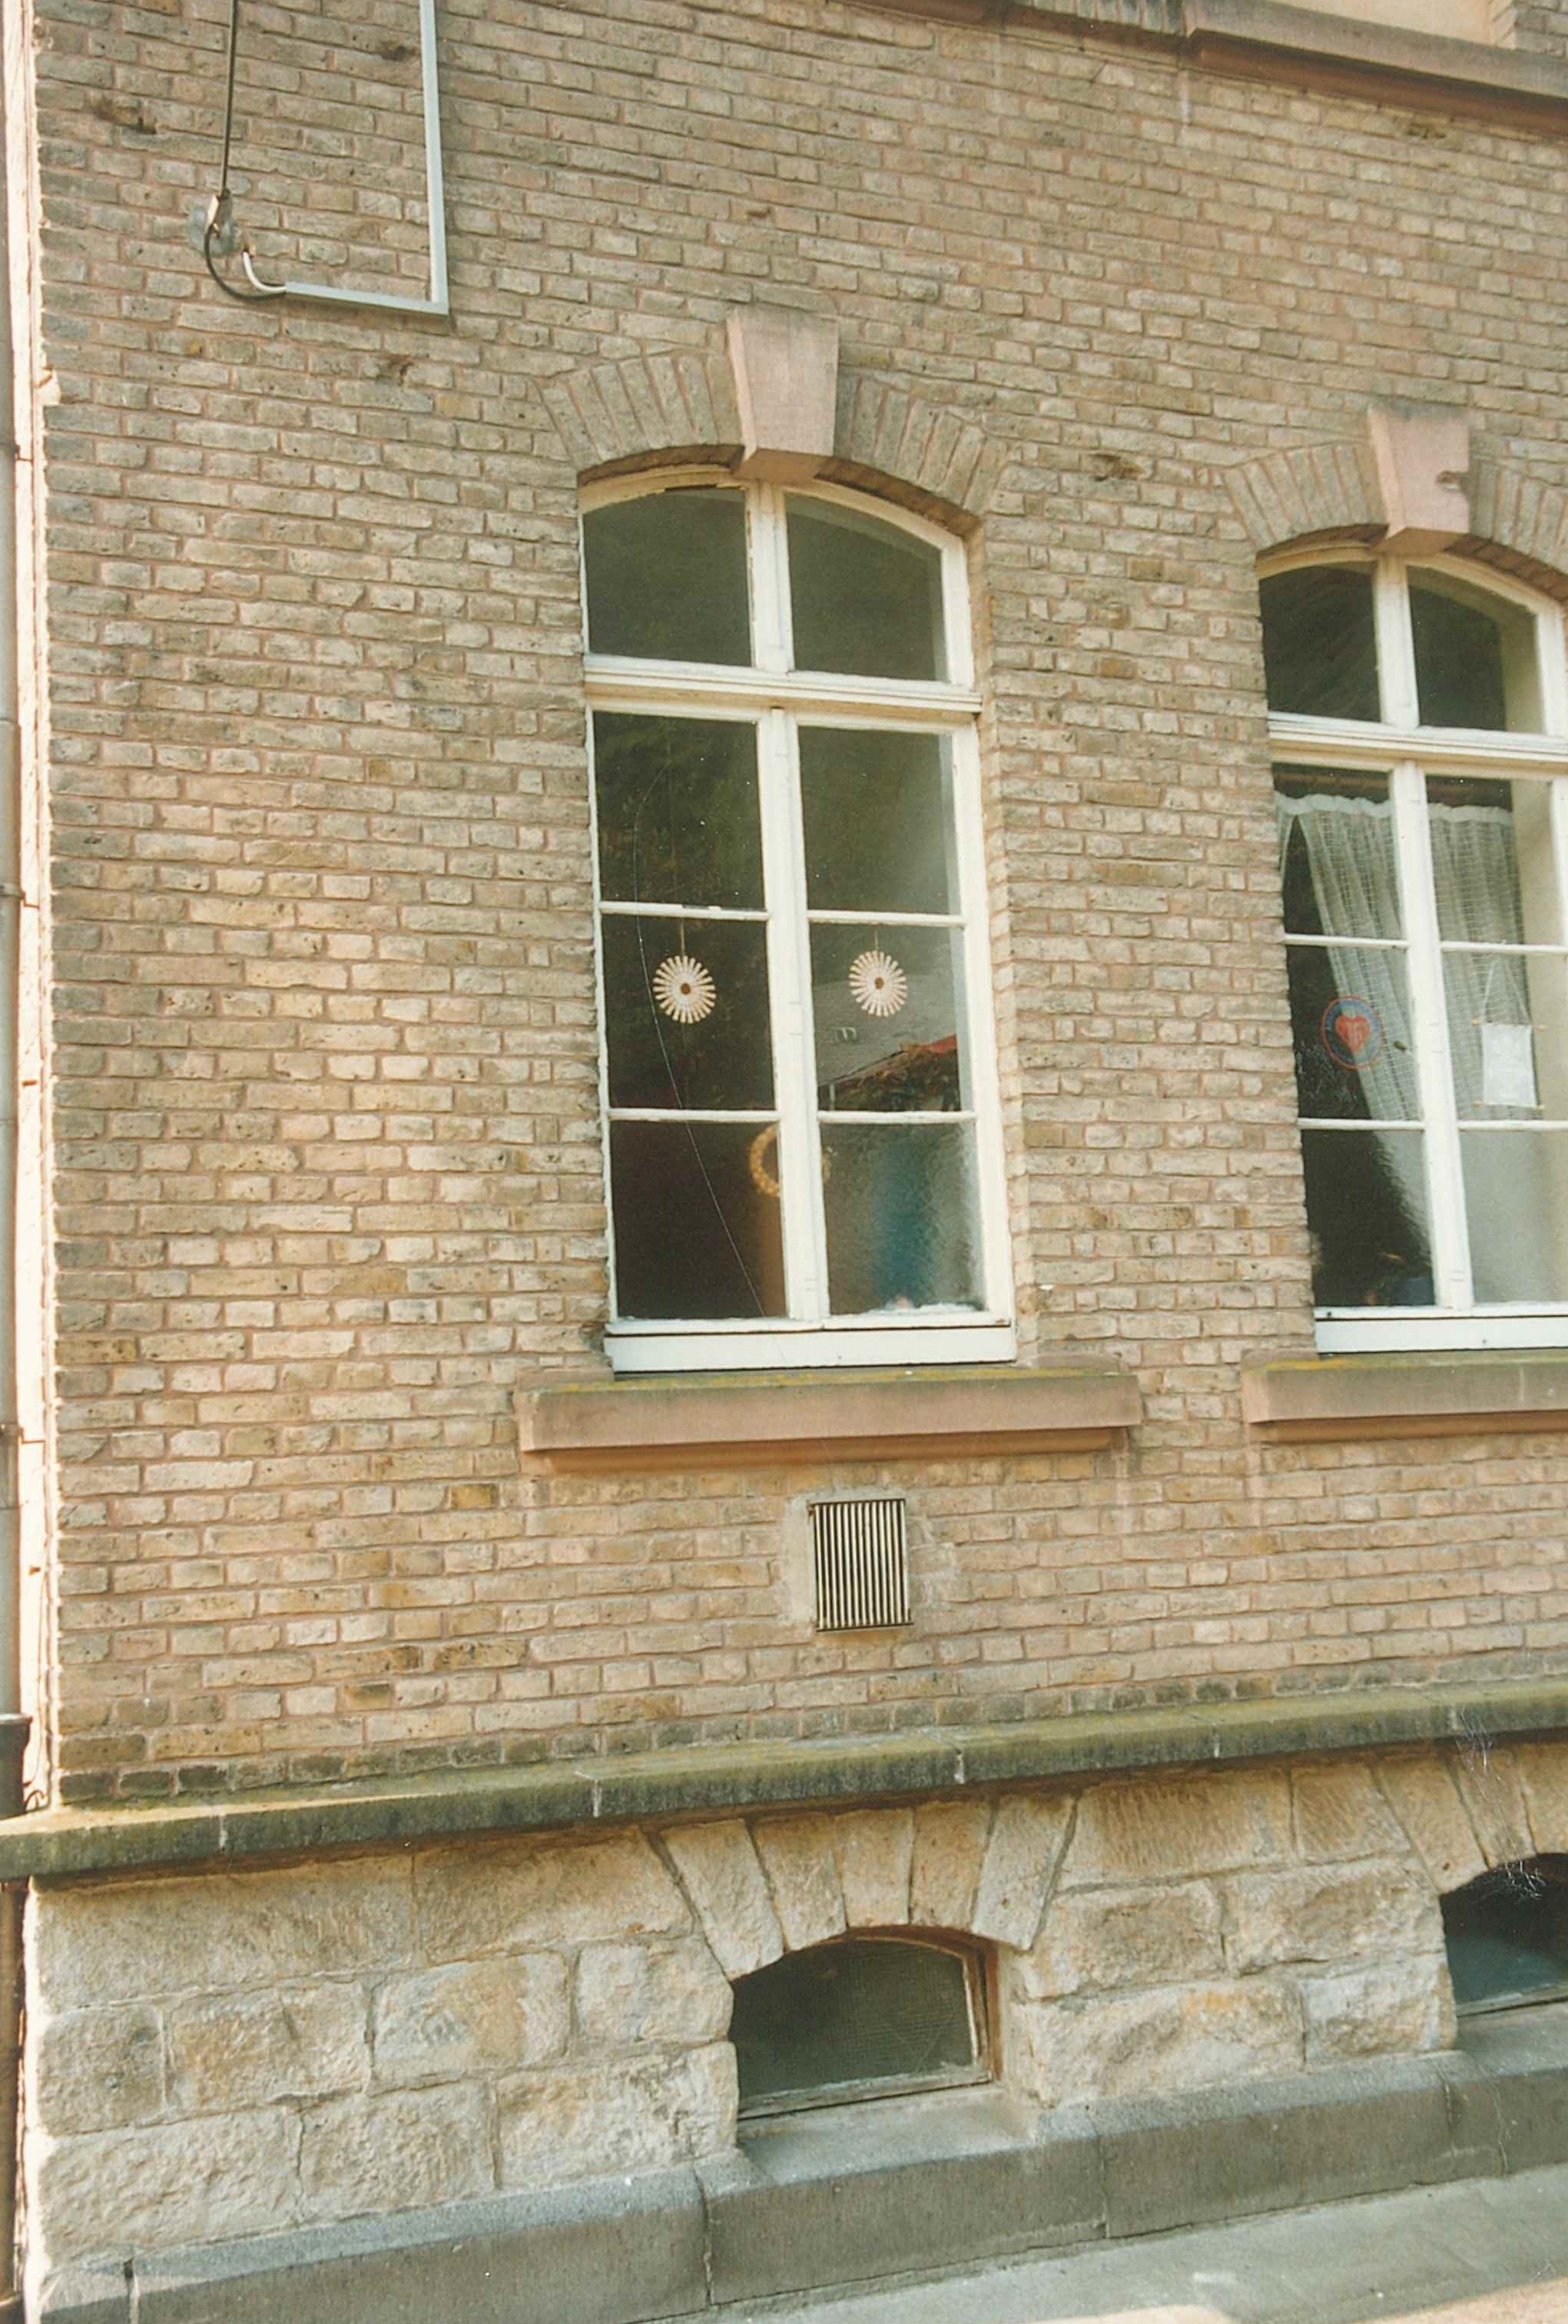 Ehemalige katholische Volksschule, Sayn, Detailaufnahme 1992 (REM CC BY-NC-SA)